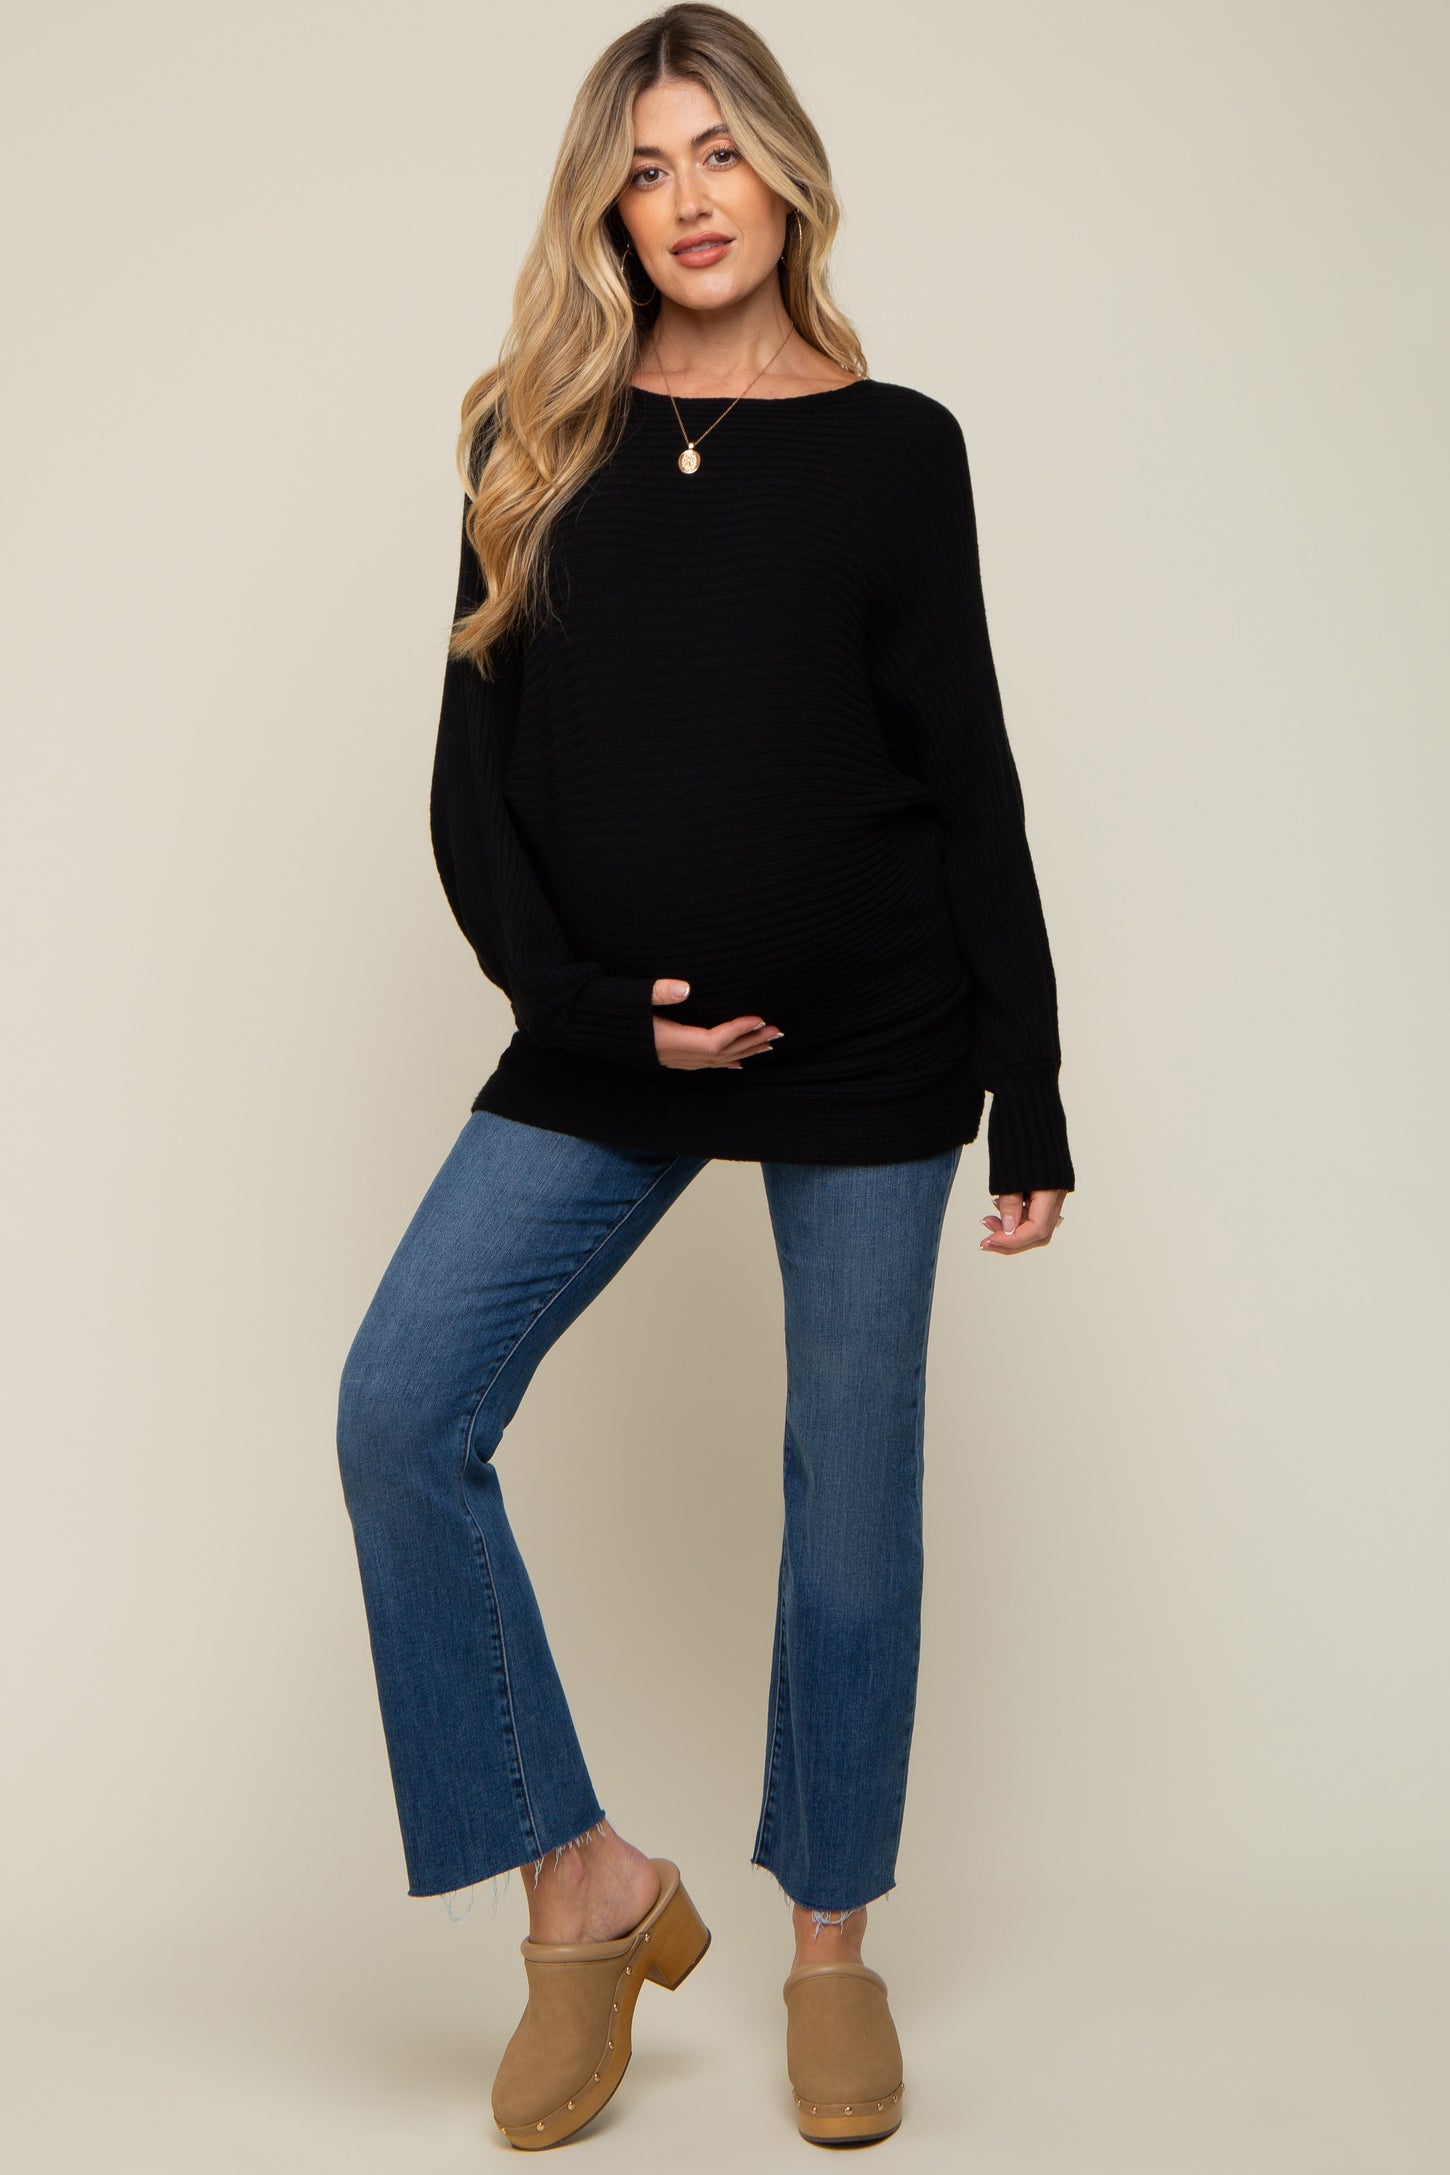 Black Knit Dolman Sleeve Maternity Sweater